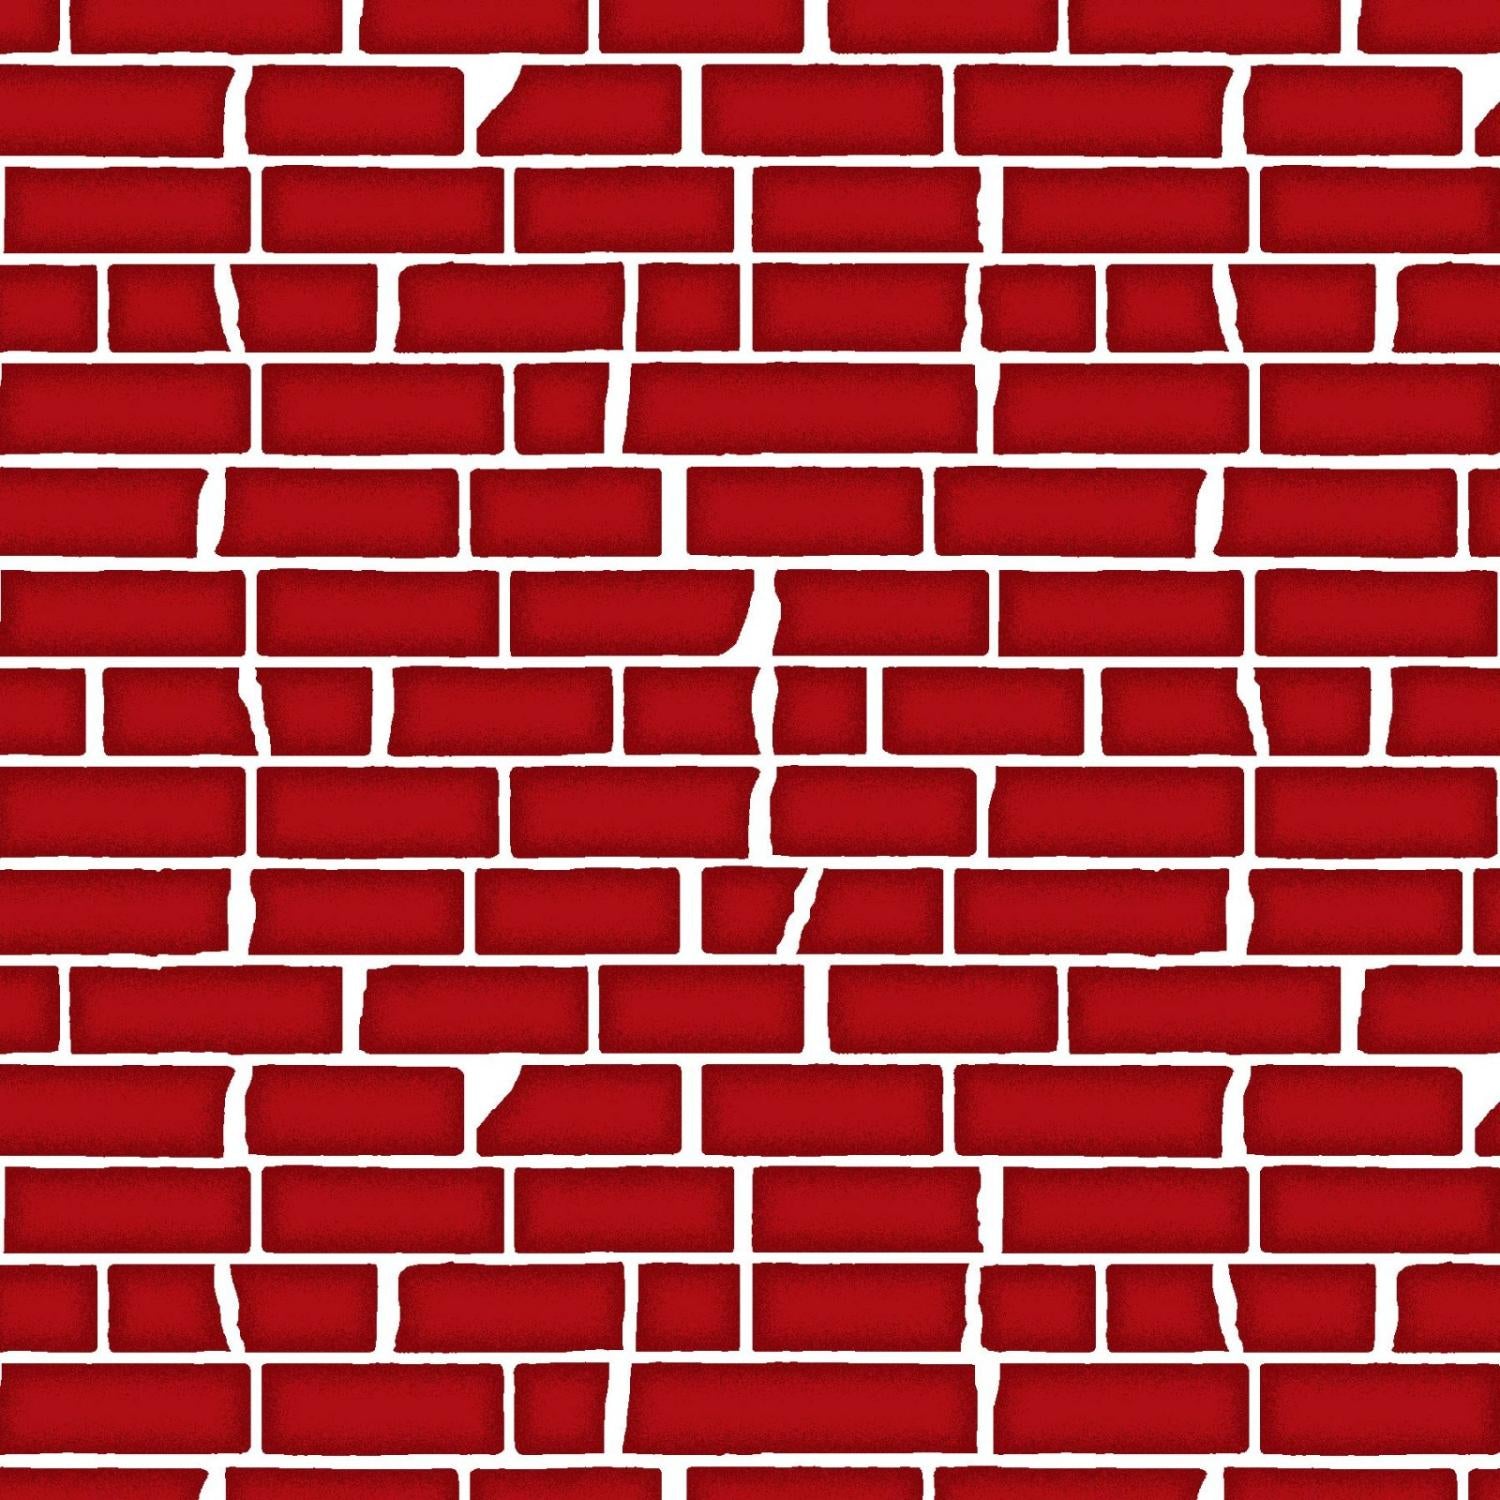 Under Construction- Brick Wall